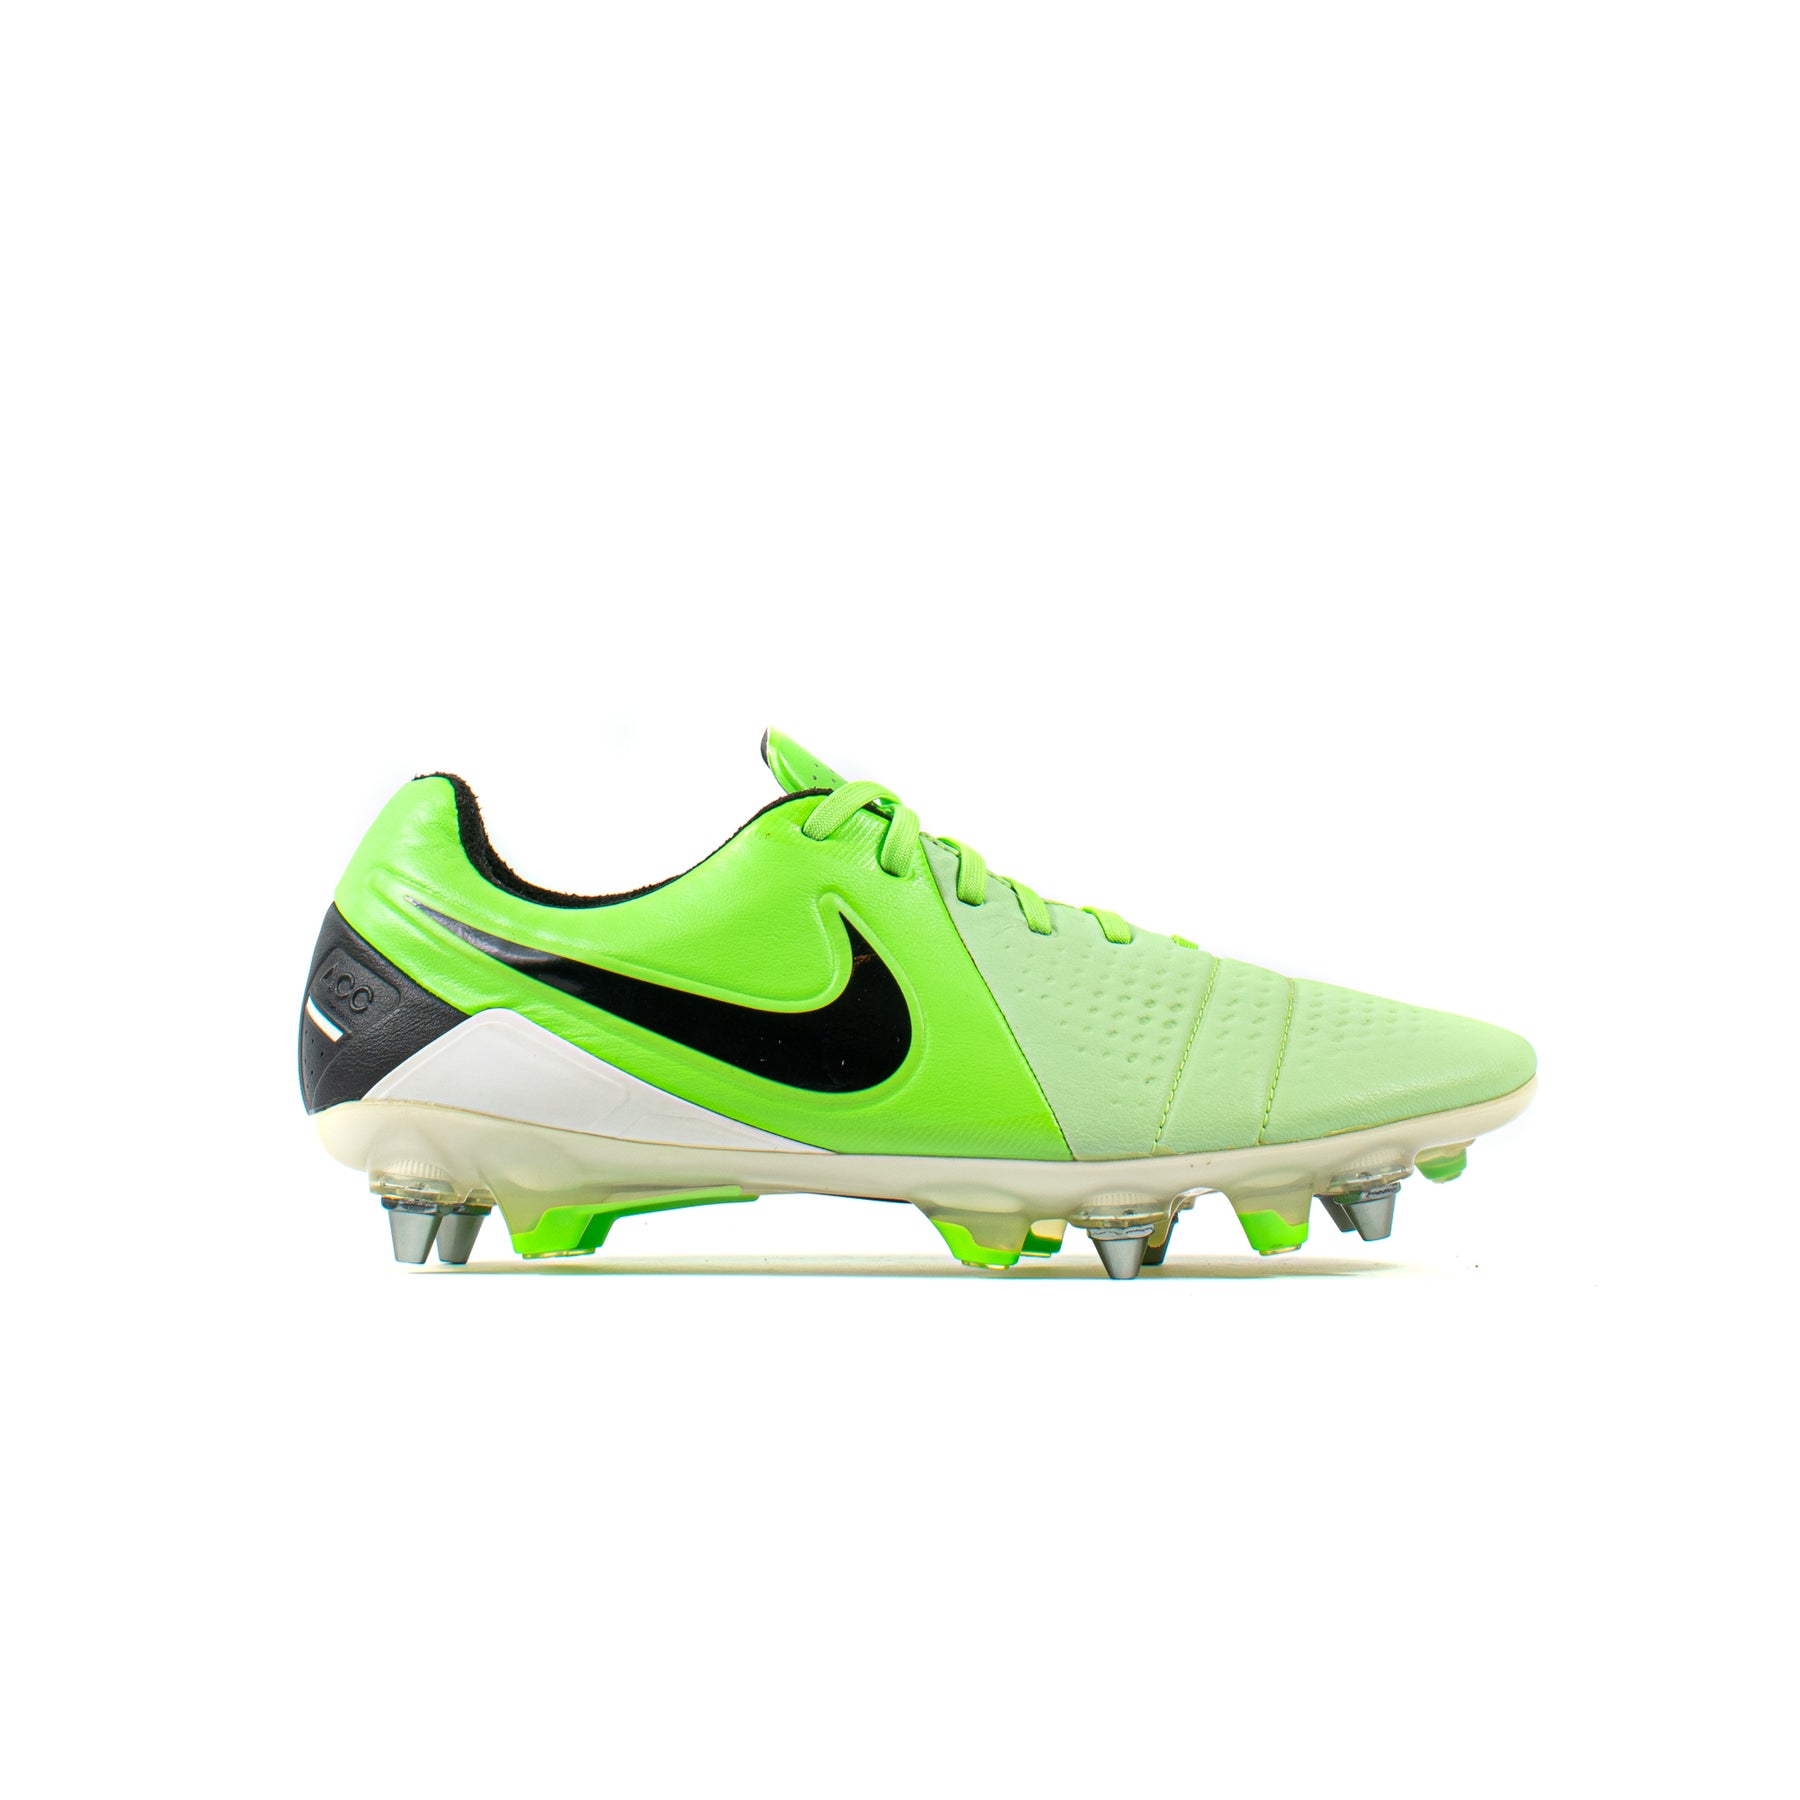 Nike CTR360 Maestri III Green SG Pro – Classic Soccer Cleats